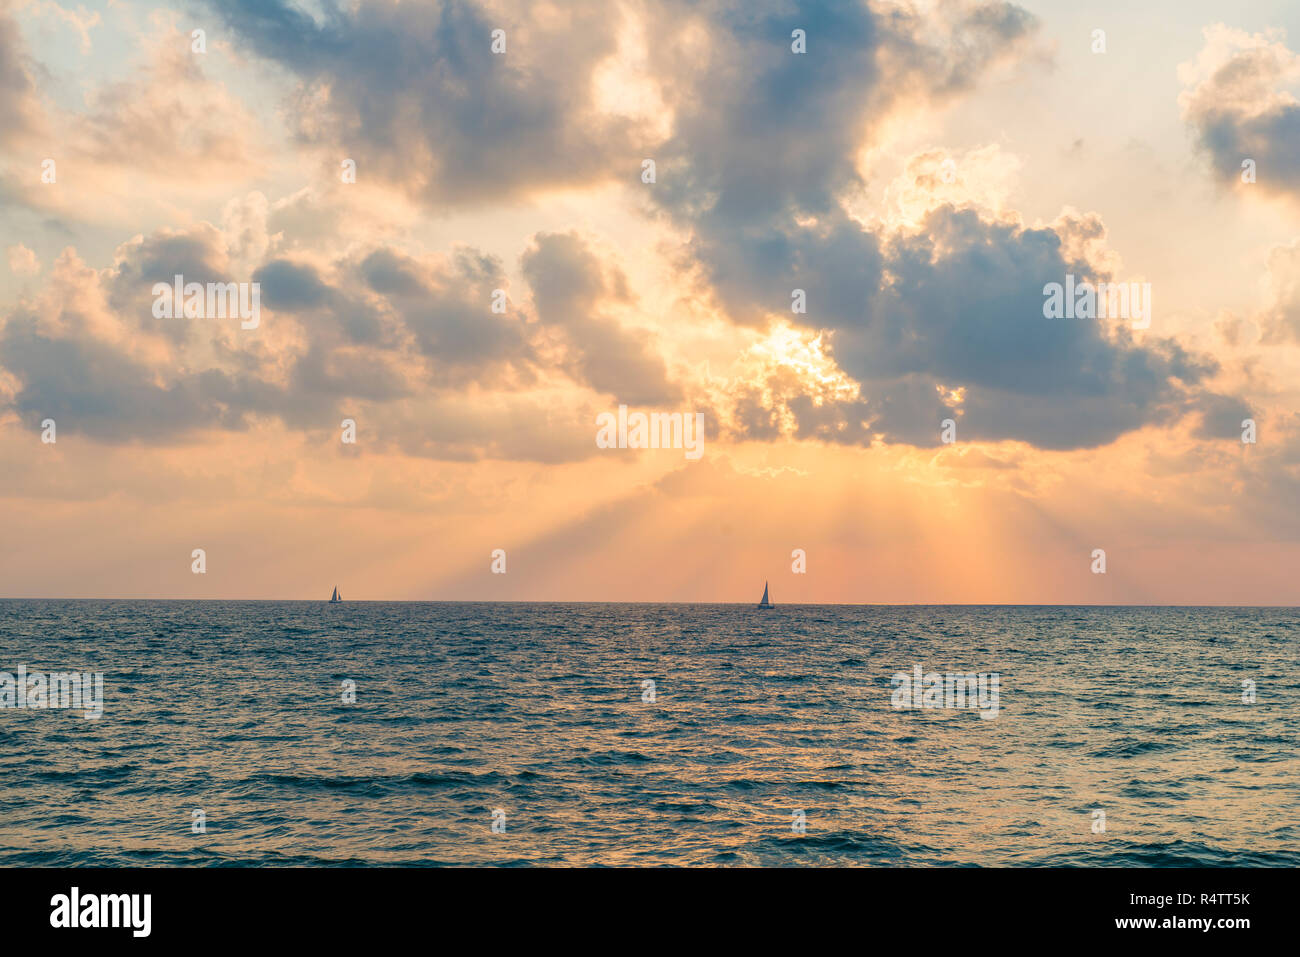 Sunset over the sea, sailboat on the horizon, Tel Aviv, Israel Stock Photo